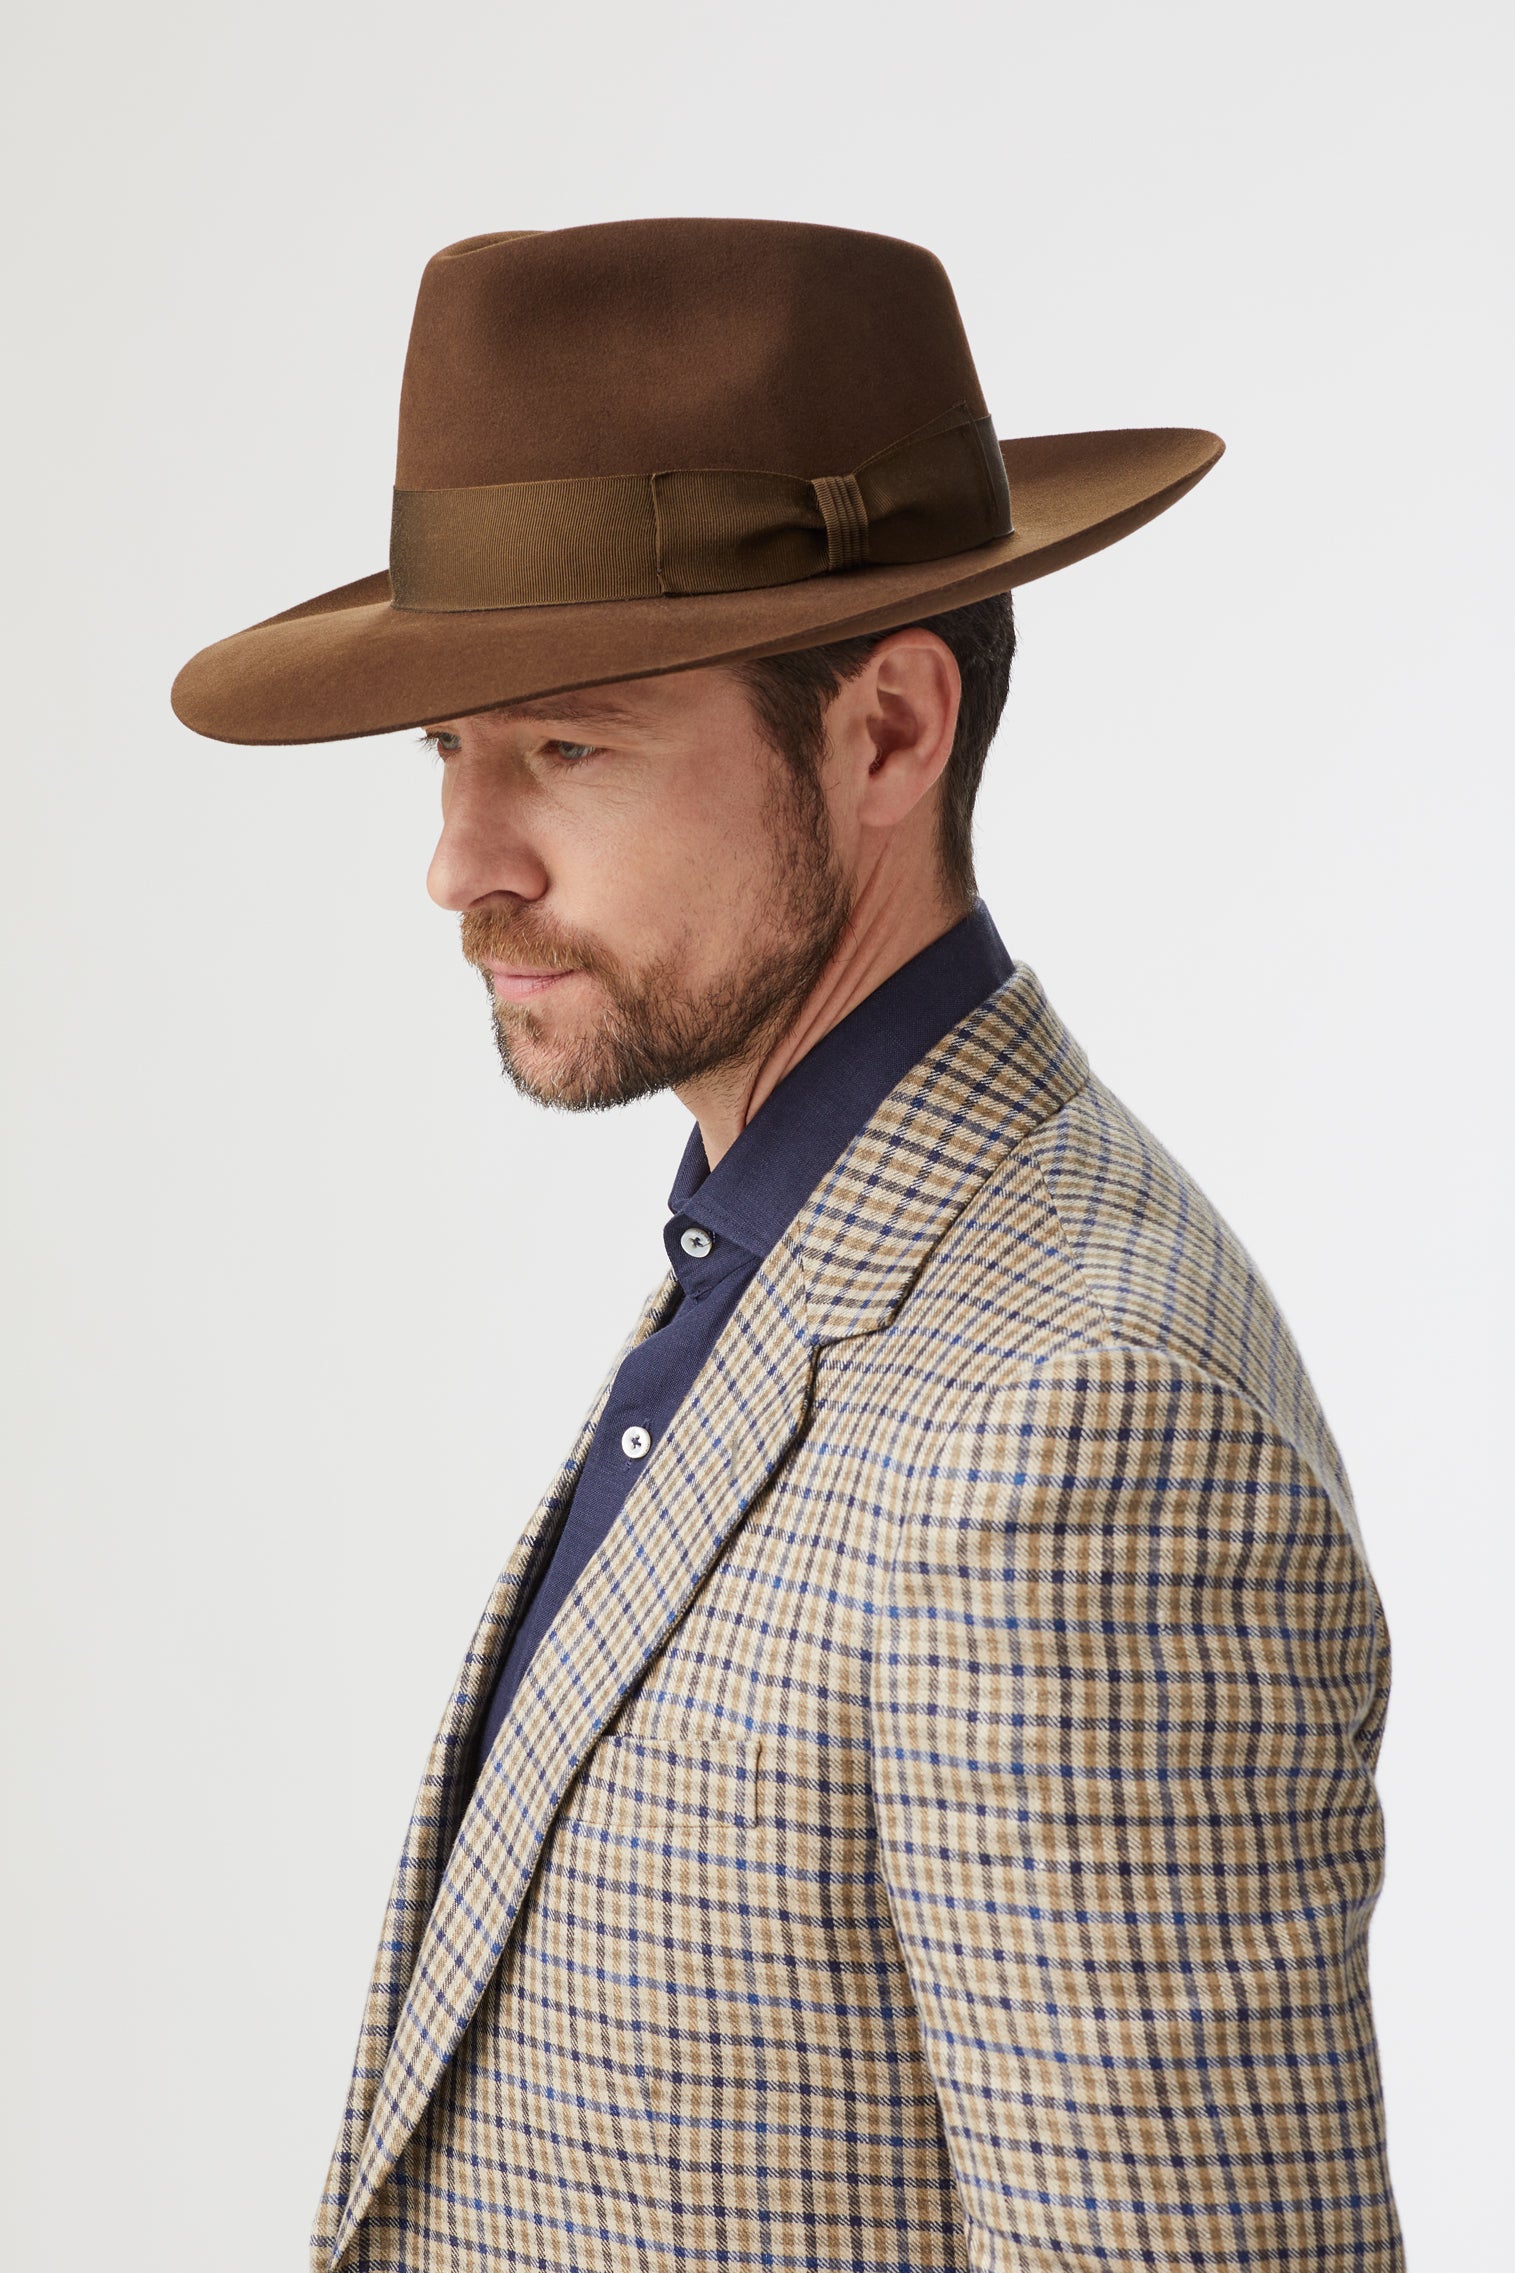 Escorial Wool Stafford Fedora - Men's Hats - Lock & Co. Hatters London UK